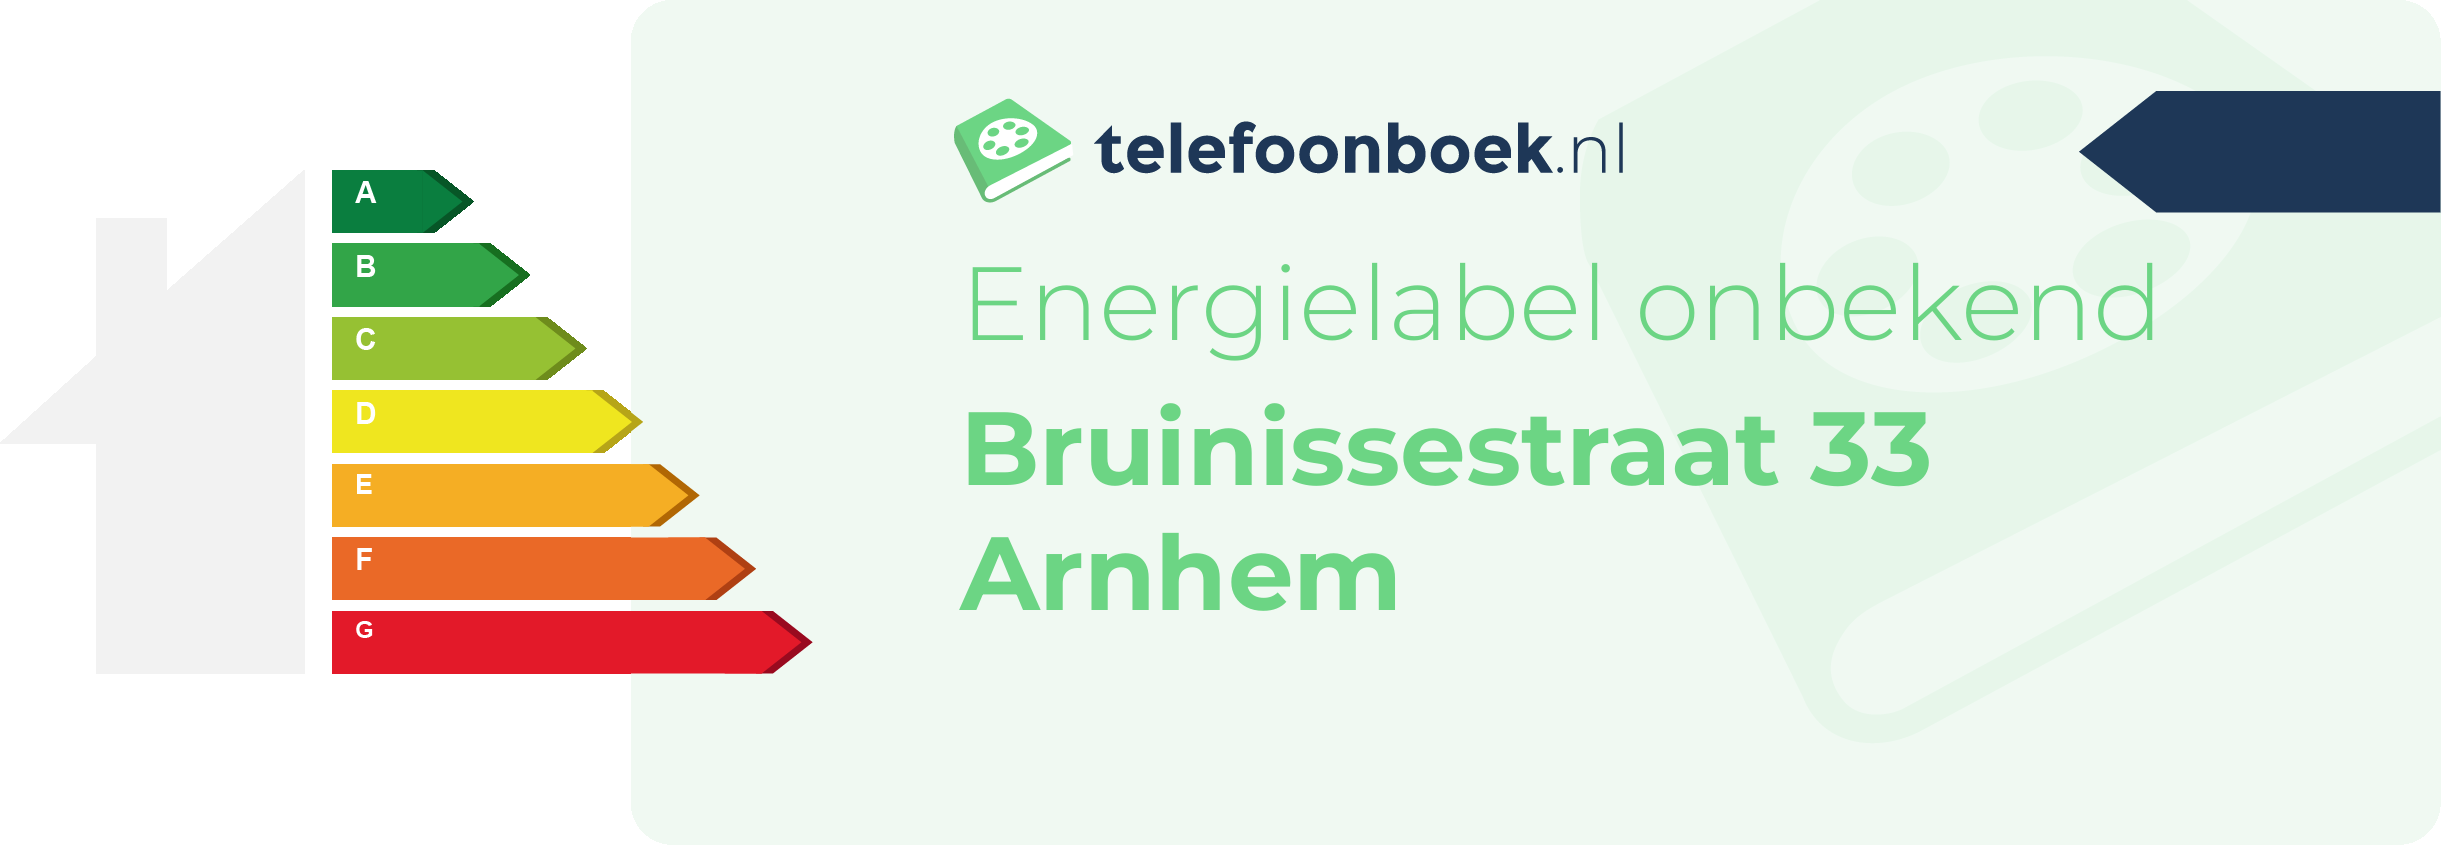 Energielabel Bruinissestraat 33 Arnhem